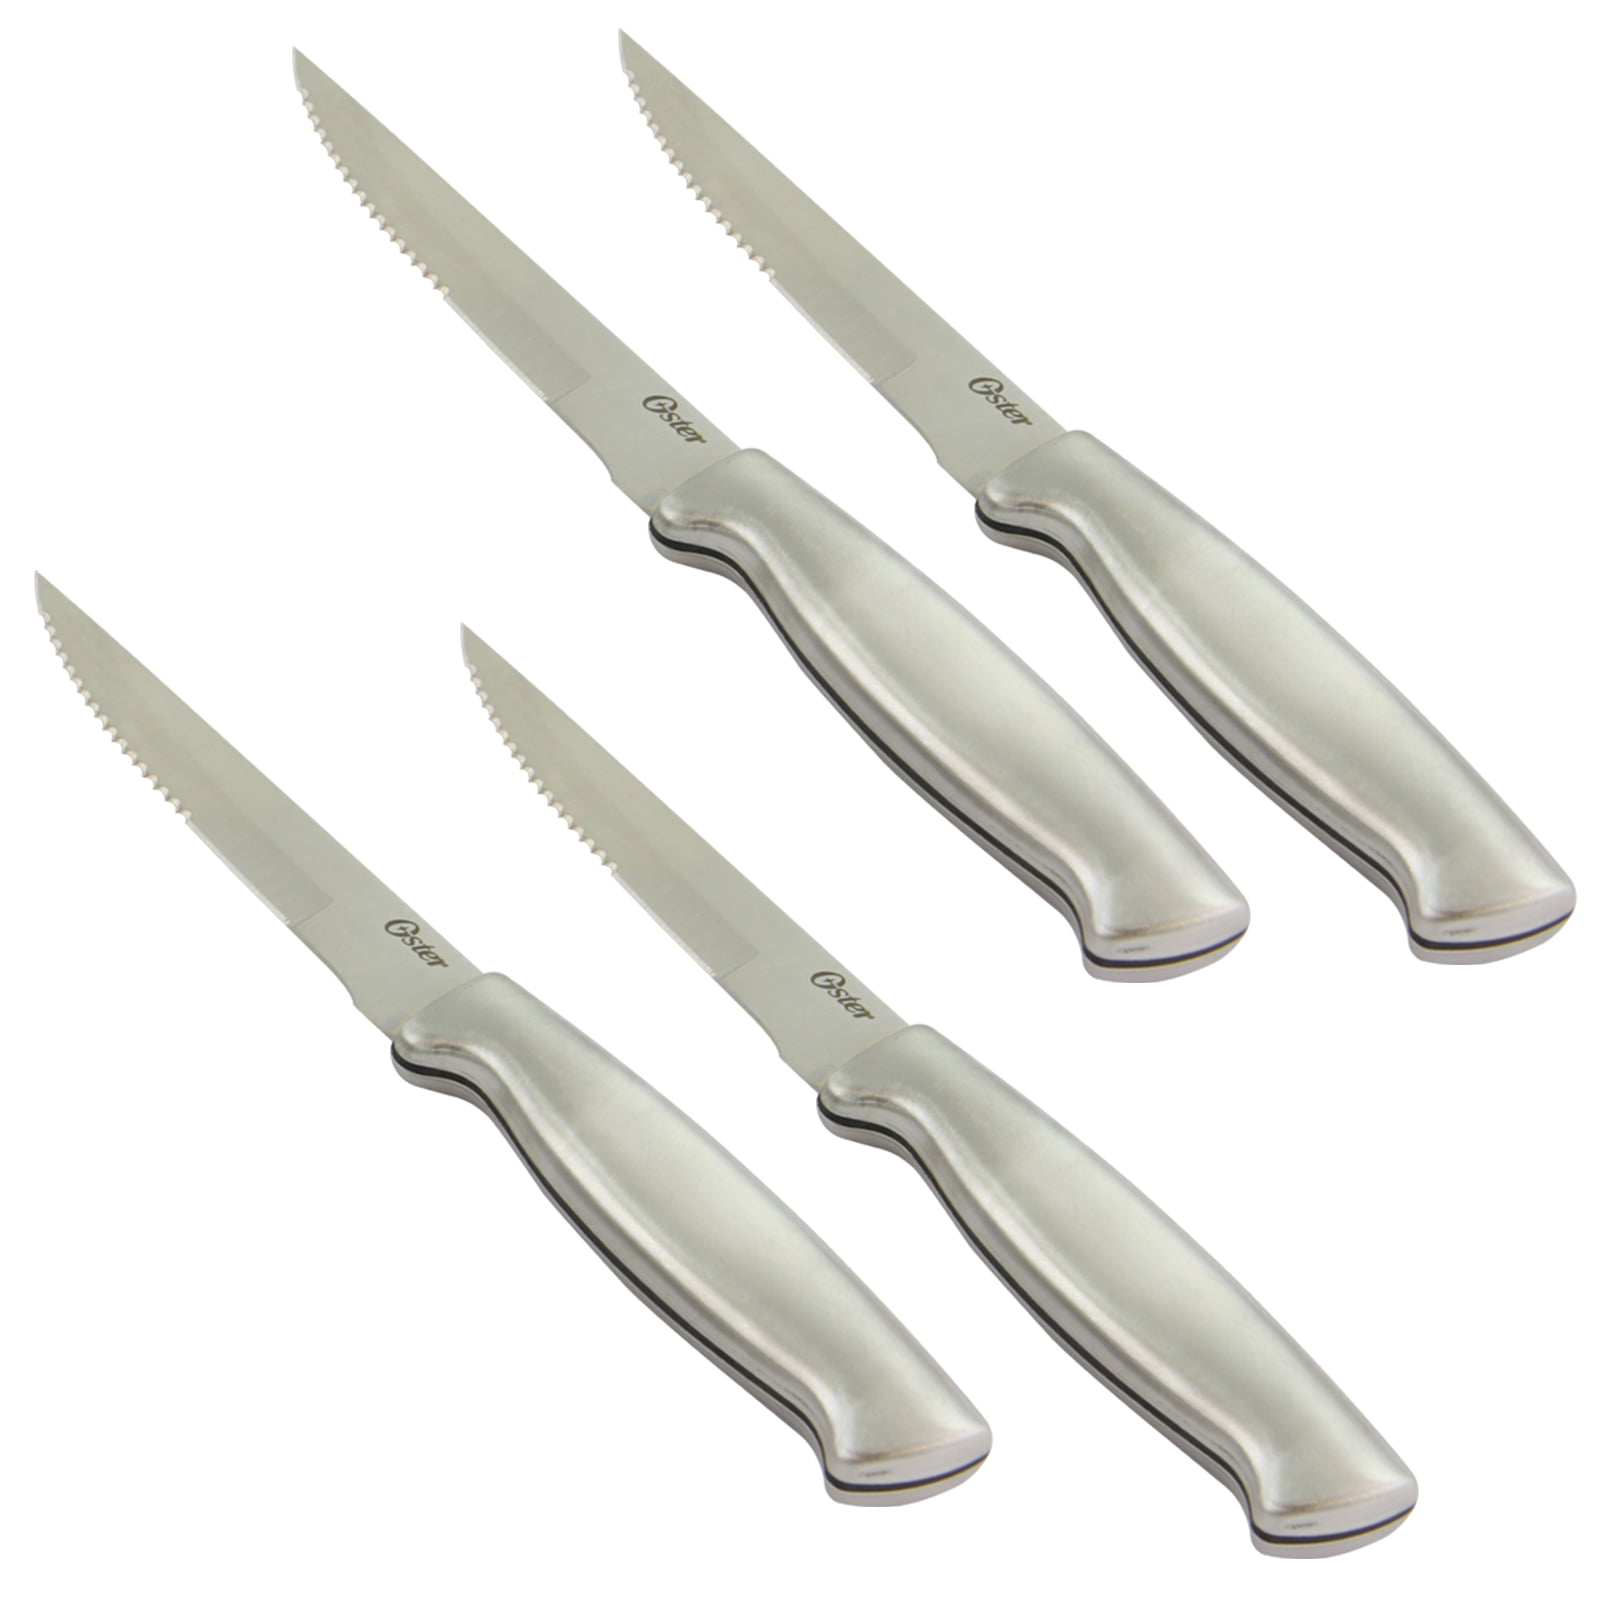  Dalstrong Steak Knife Set - 4 Piece - 5 inch Blade - Omega  Series - BD1N-V Hyper Steel Kitchen Knife - G10 Woven Fiberglass Handle -  Razor Sharp Knife - Leather Sheath Included : Sports & Outdoors